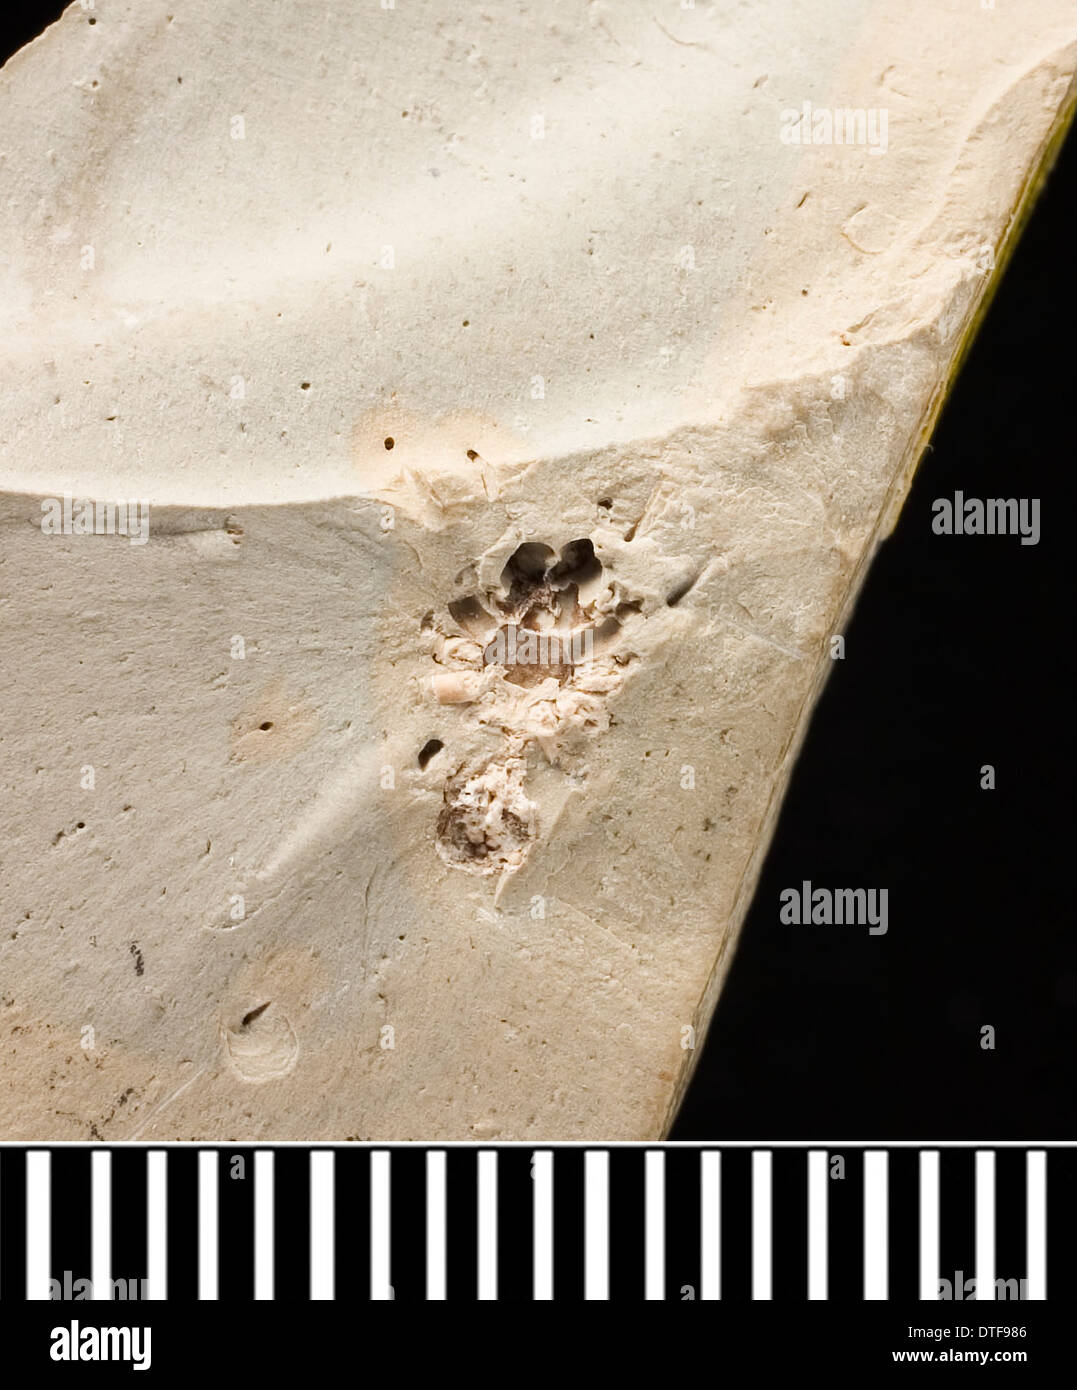 Vectaraneus, eine fossile Spinne Stockfoto